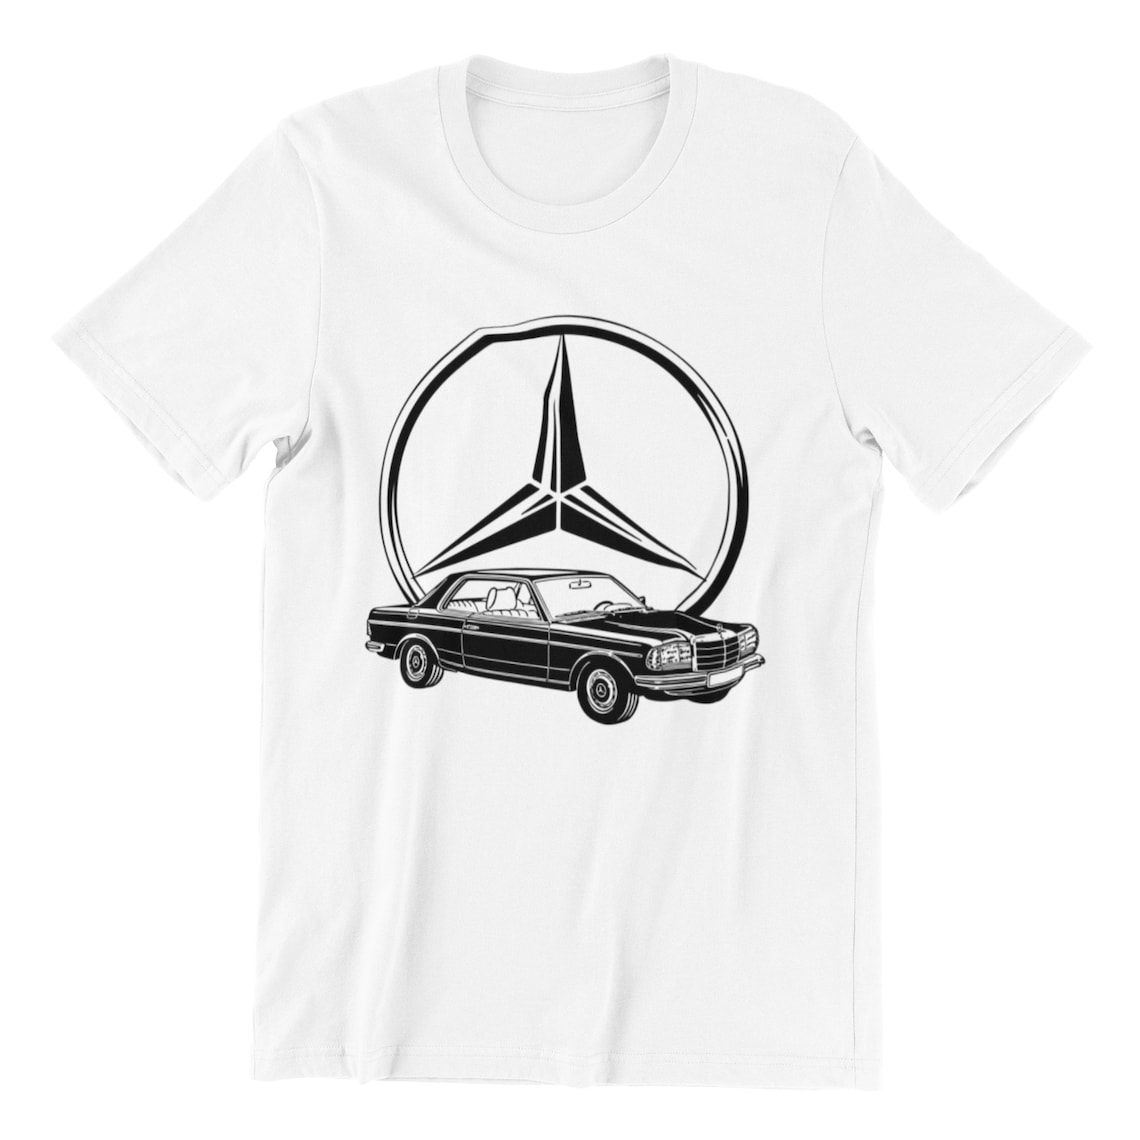 Mercedes Benz Merch Poster Print Shirt Vintage 90s car logo | Etsy